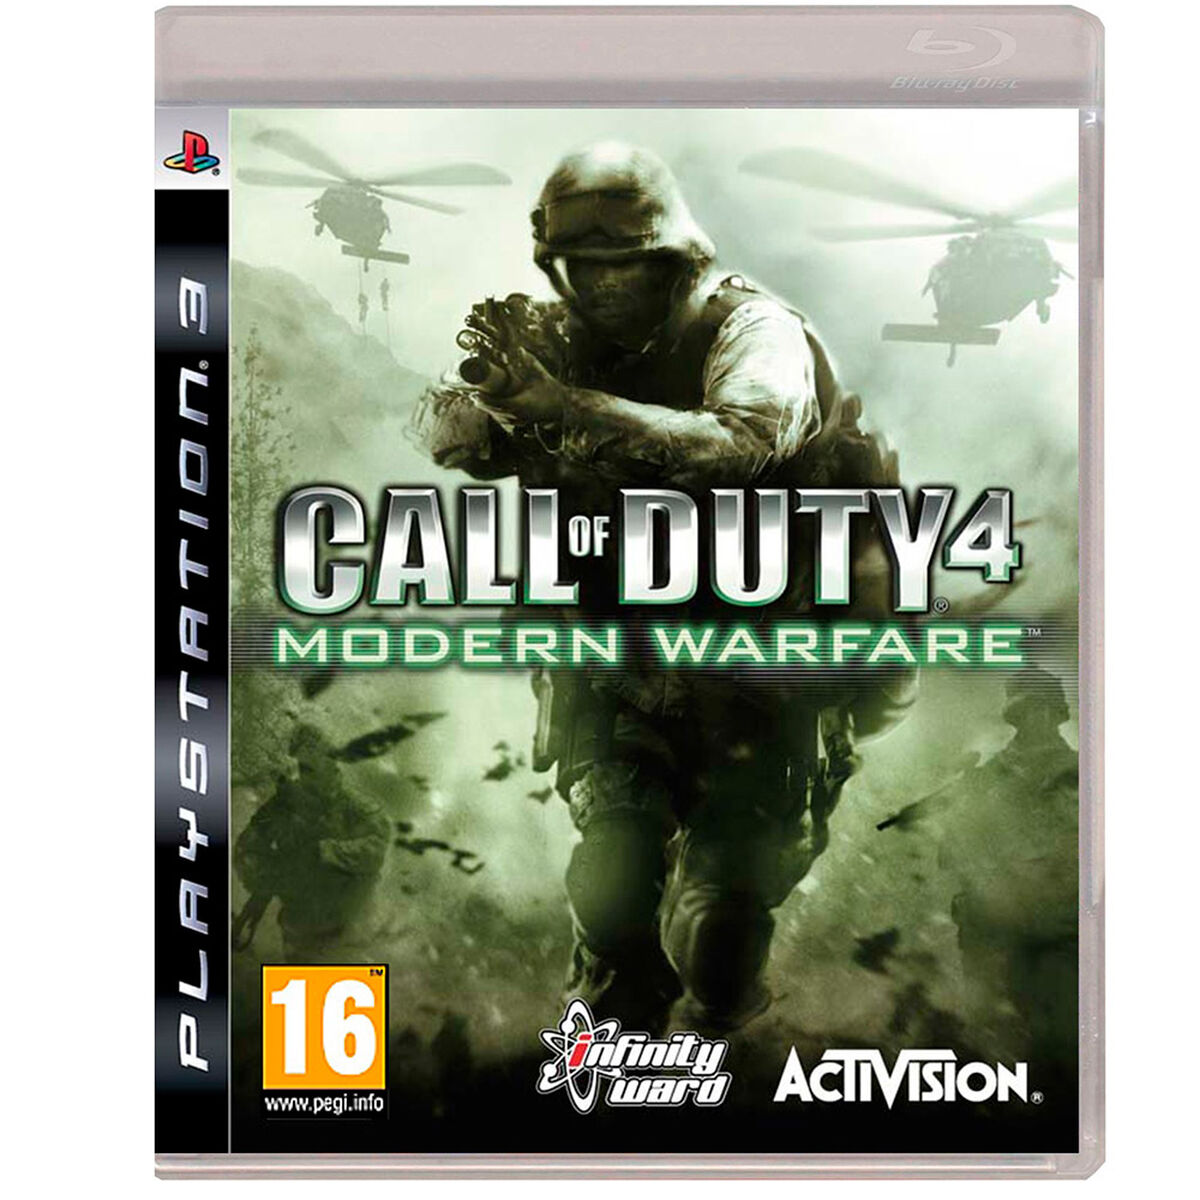 Juego PS3 Call of Duty 4 Modern Warfare (español)